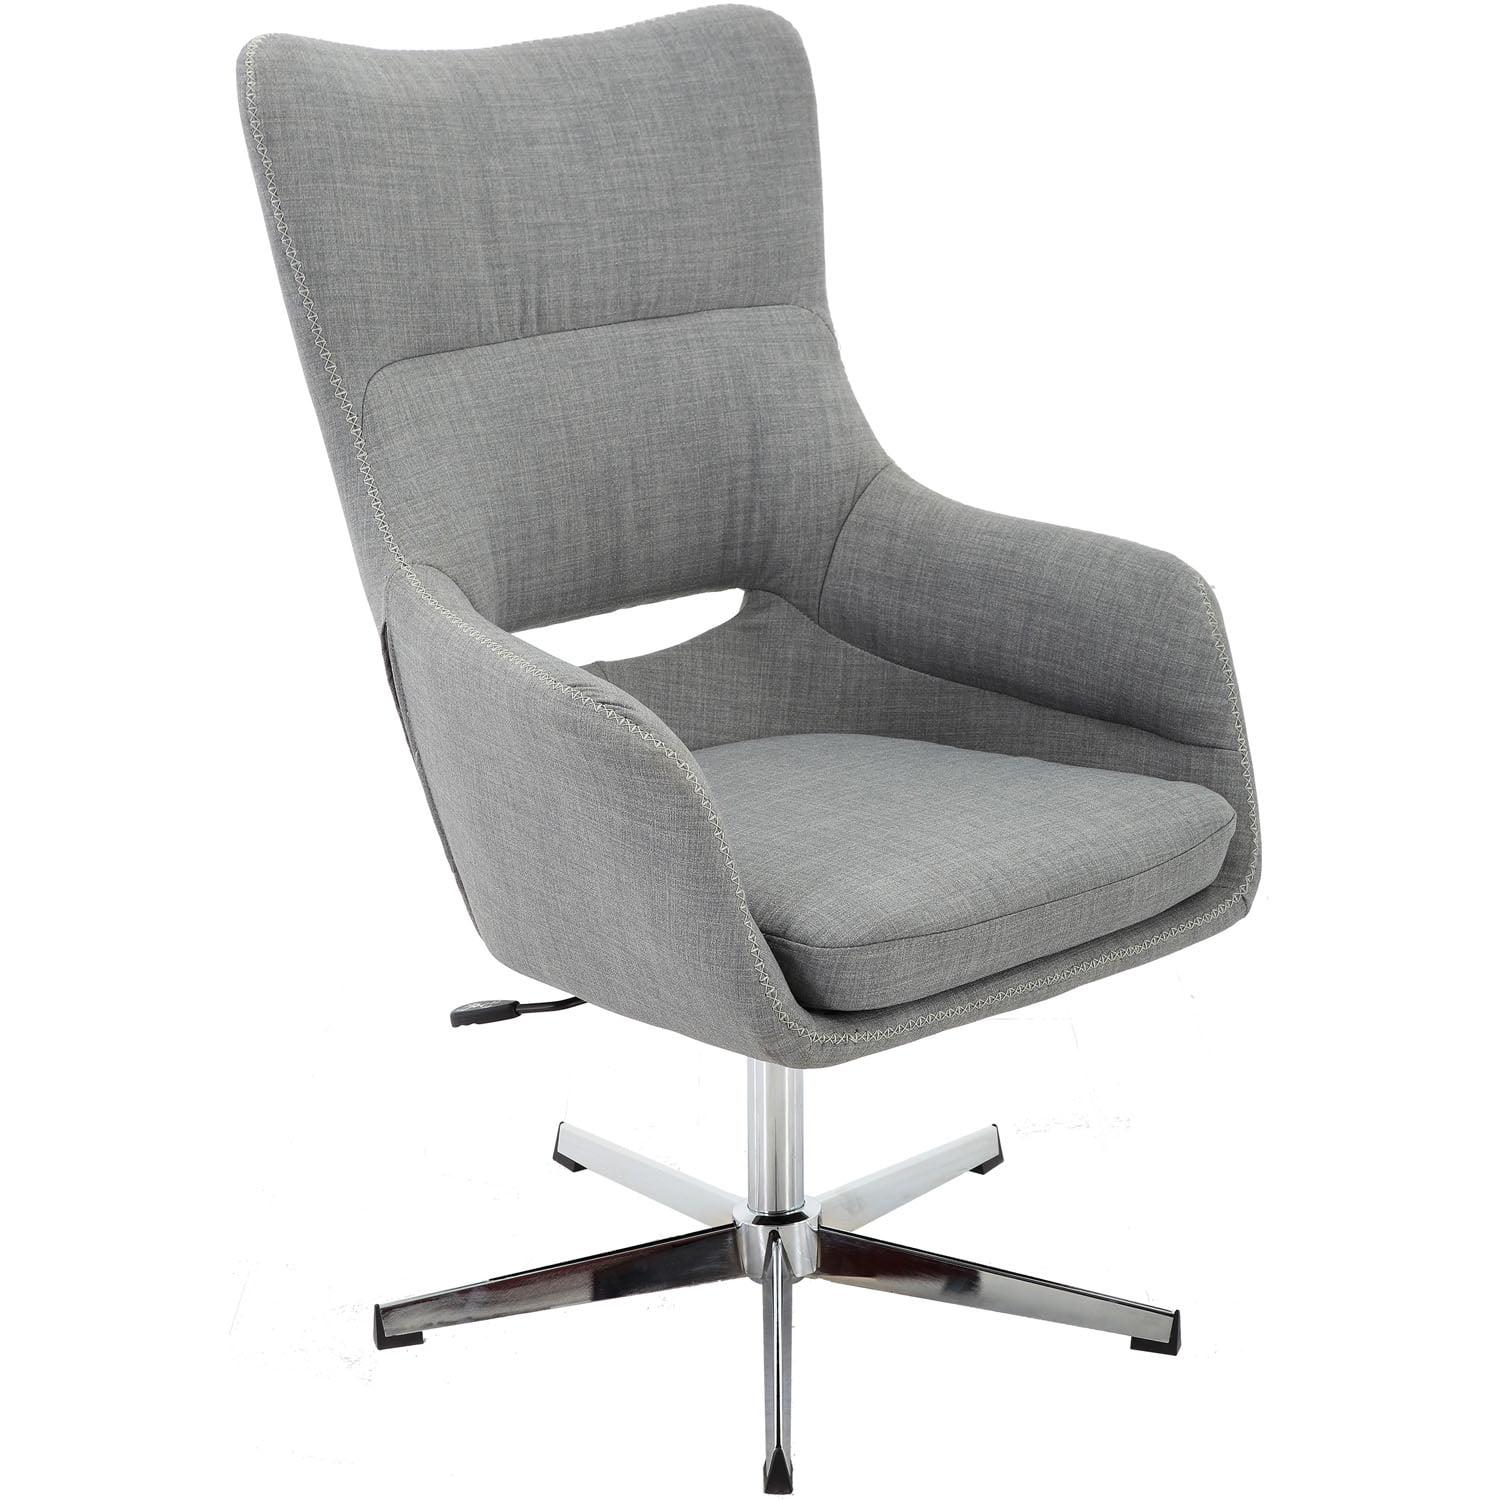 Carlton Executive Gray Leather High-Back Ergonomic Swivel Office Chair